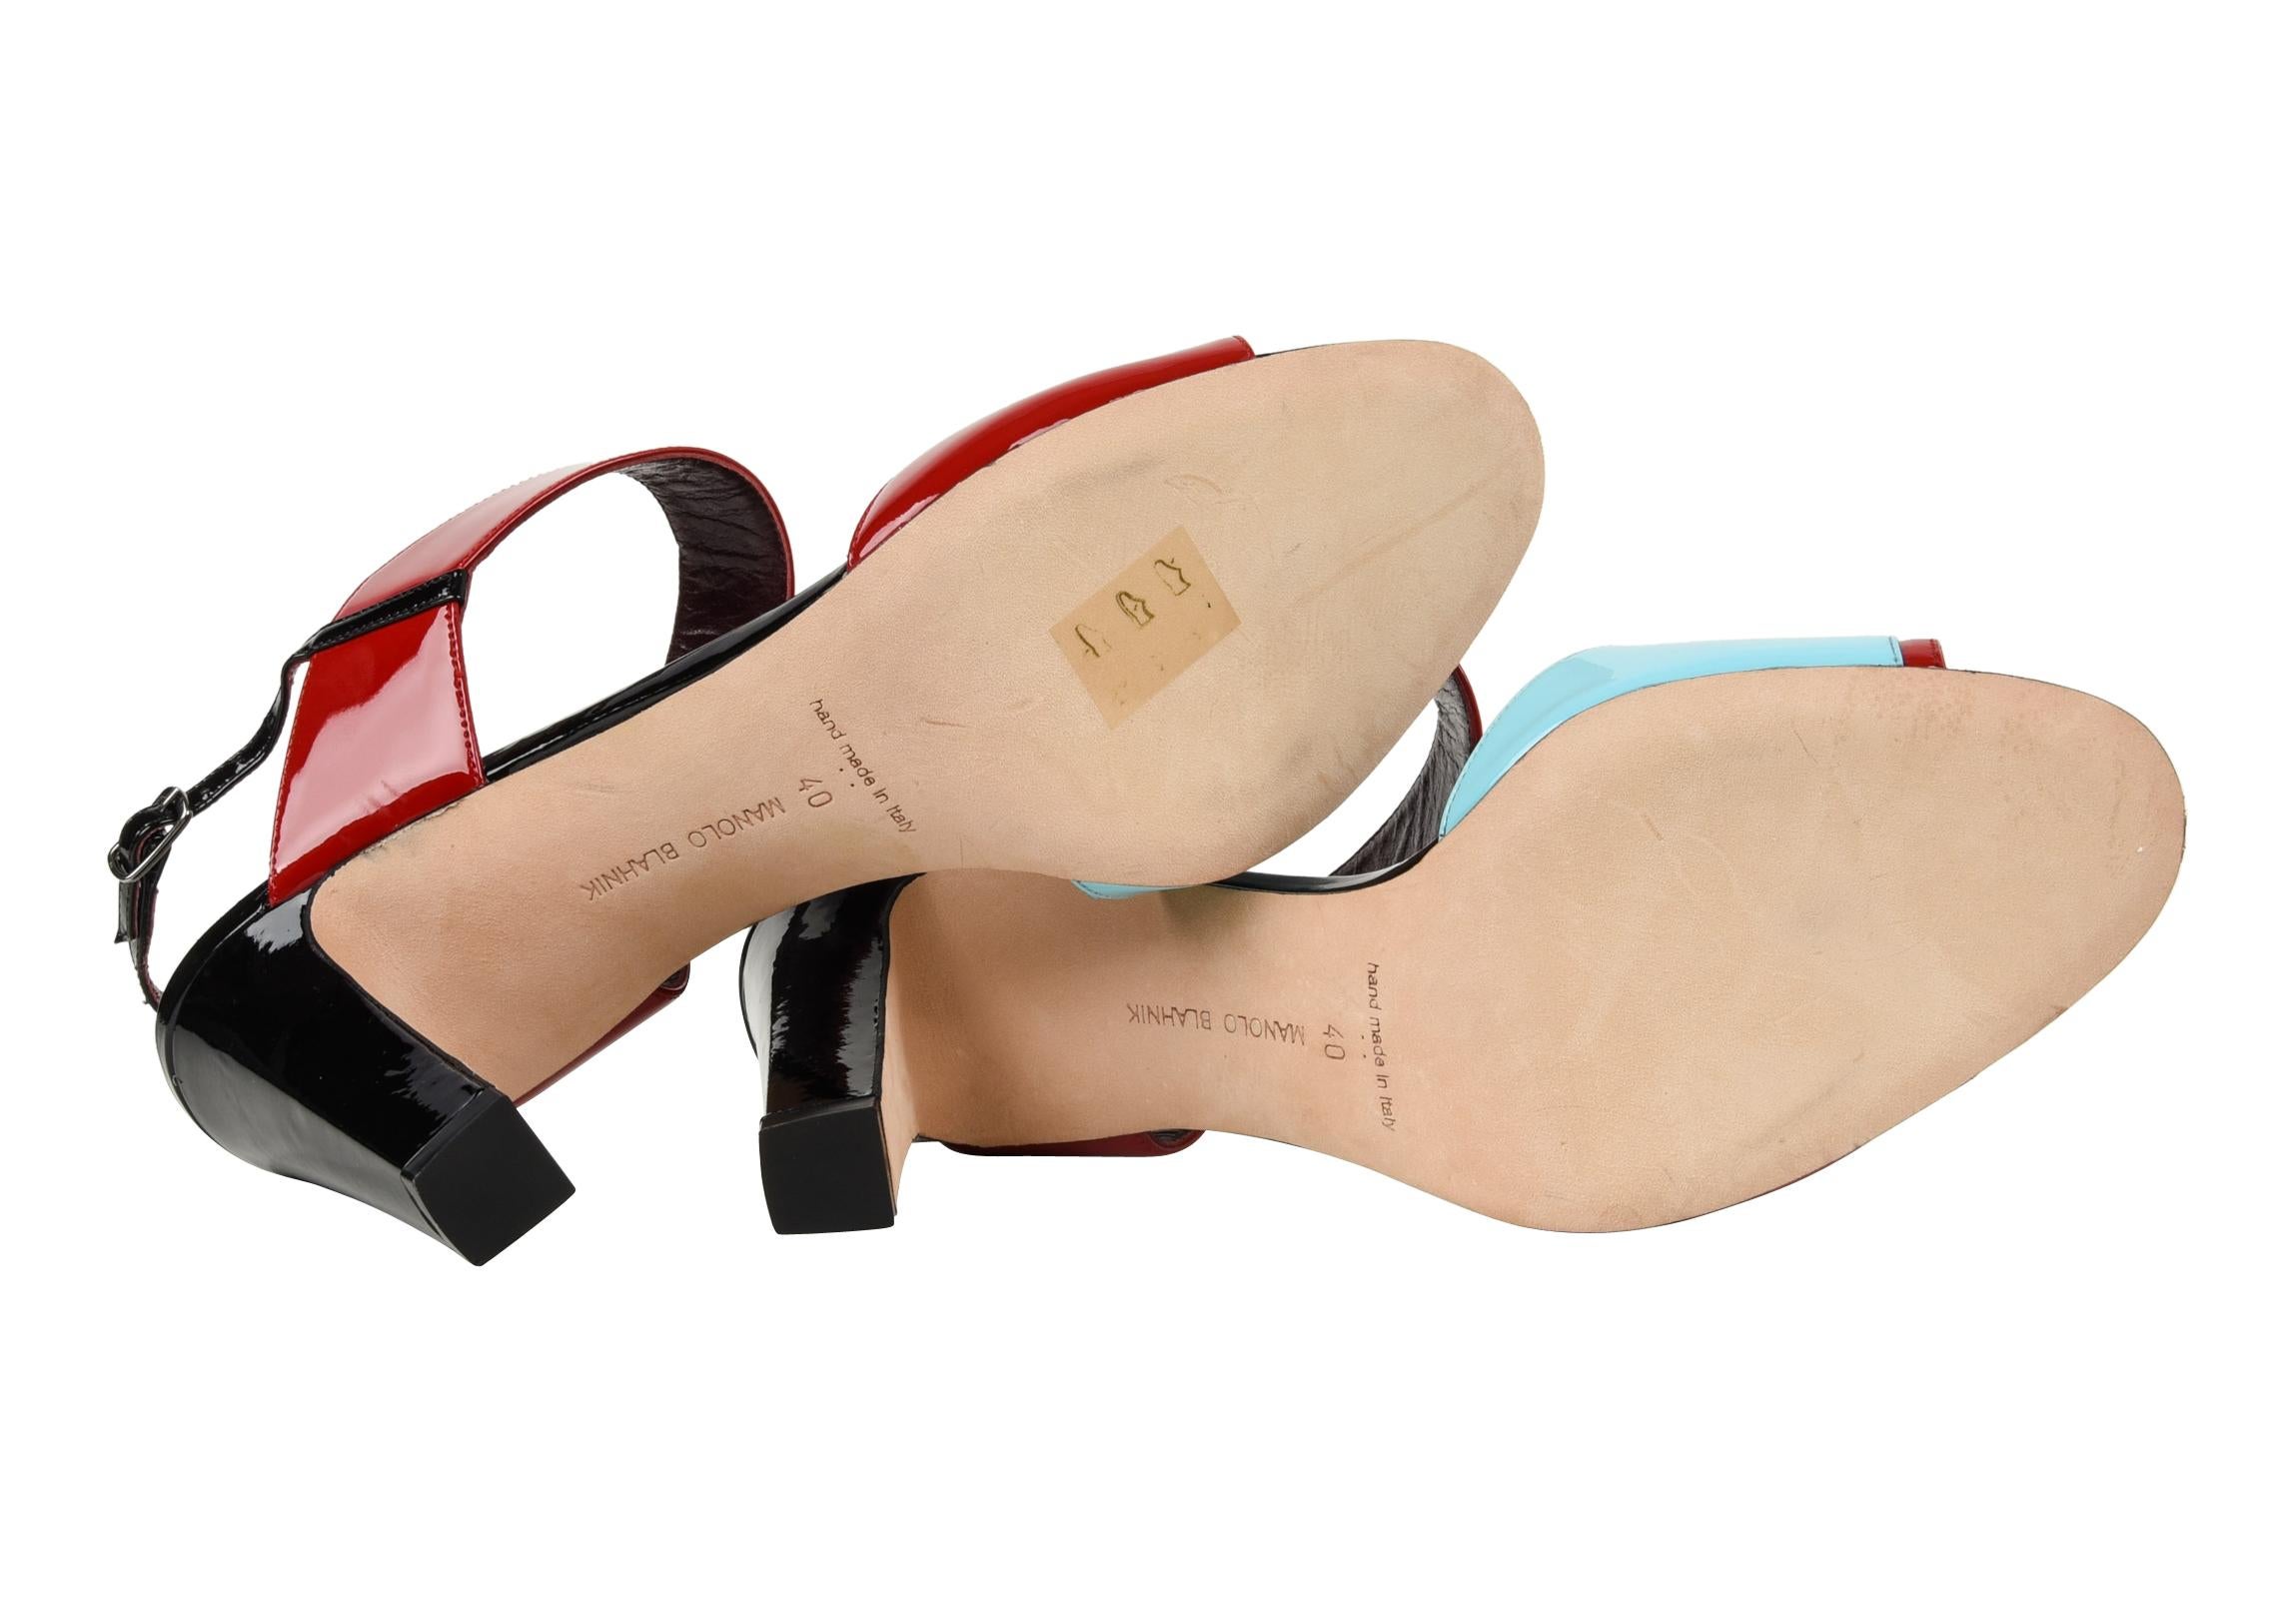 Manolo Blahnik Shoe Multi Coloured Patent Leather Red Blue Black Sandal 40 / 10 1